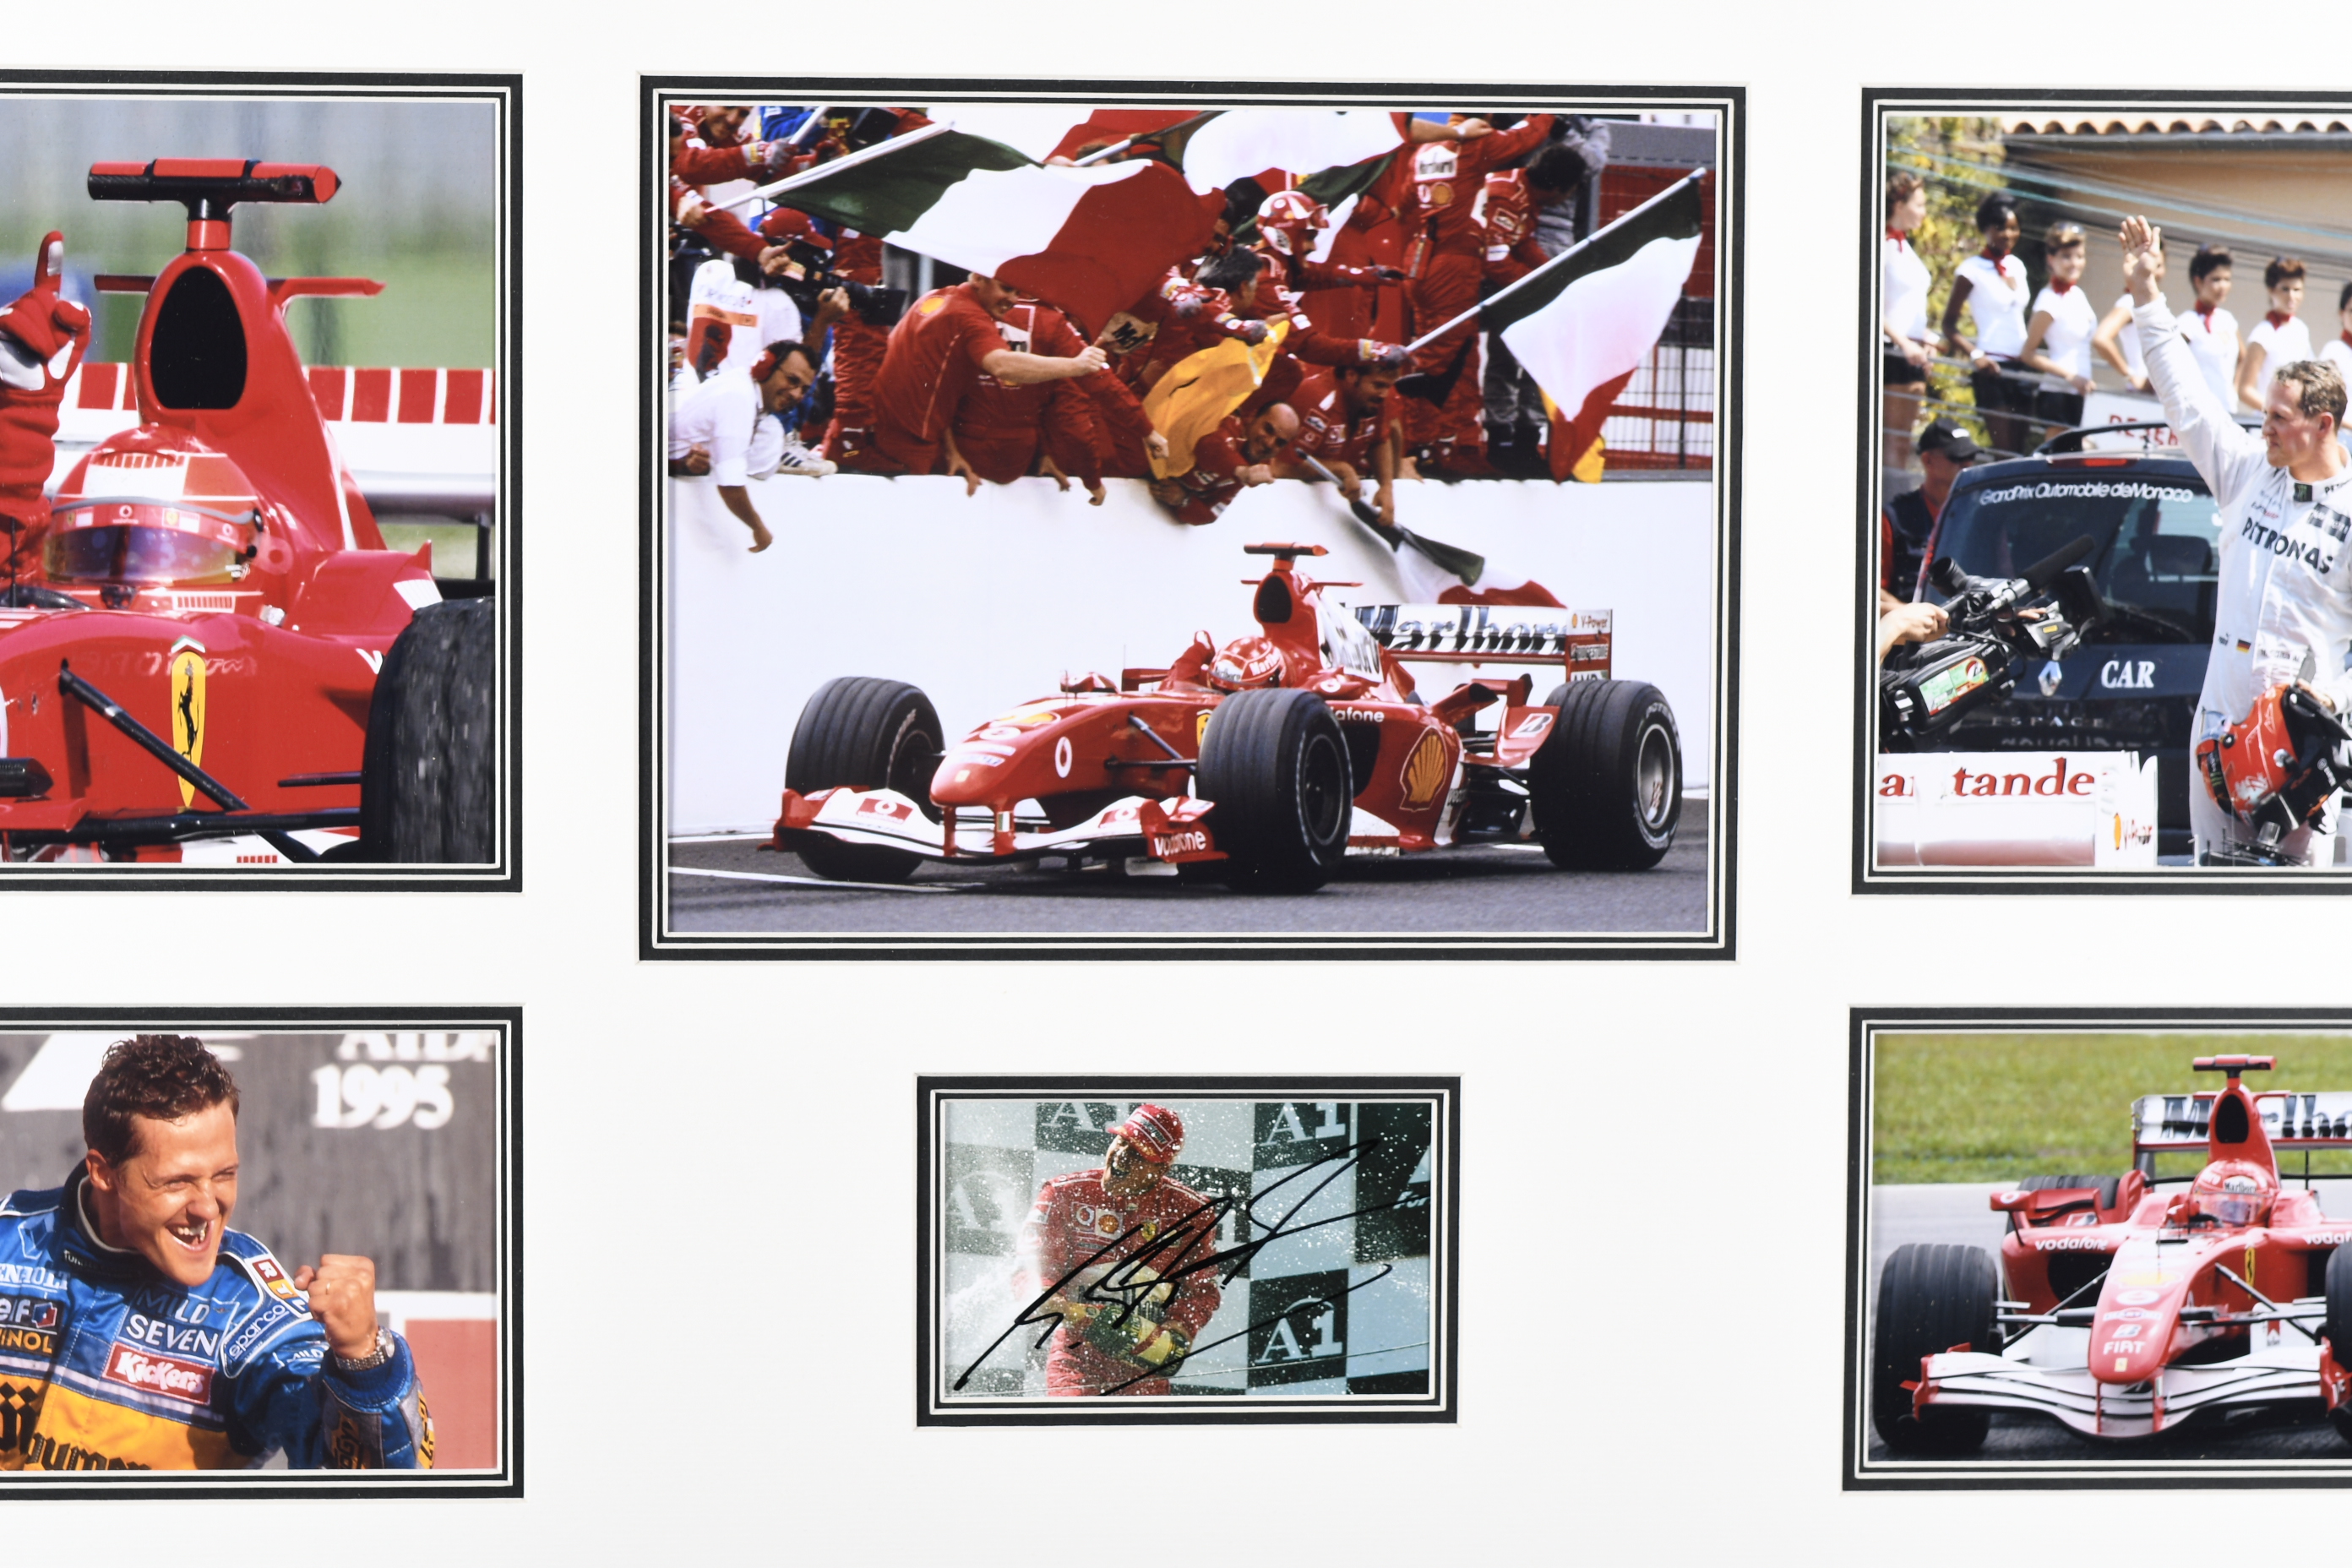 Michael Schumacher - Image 3 of 7